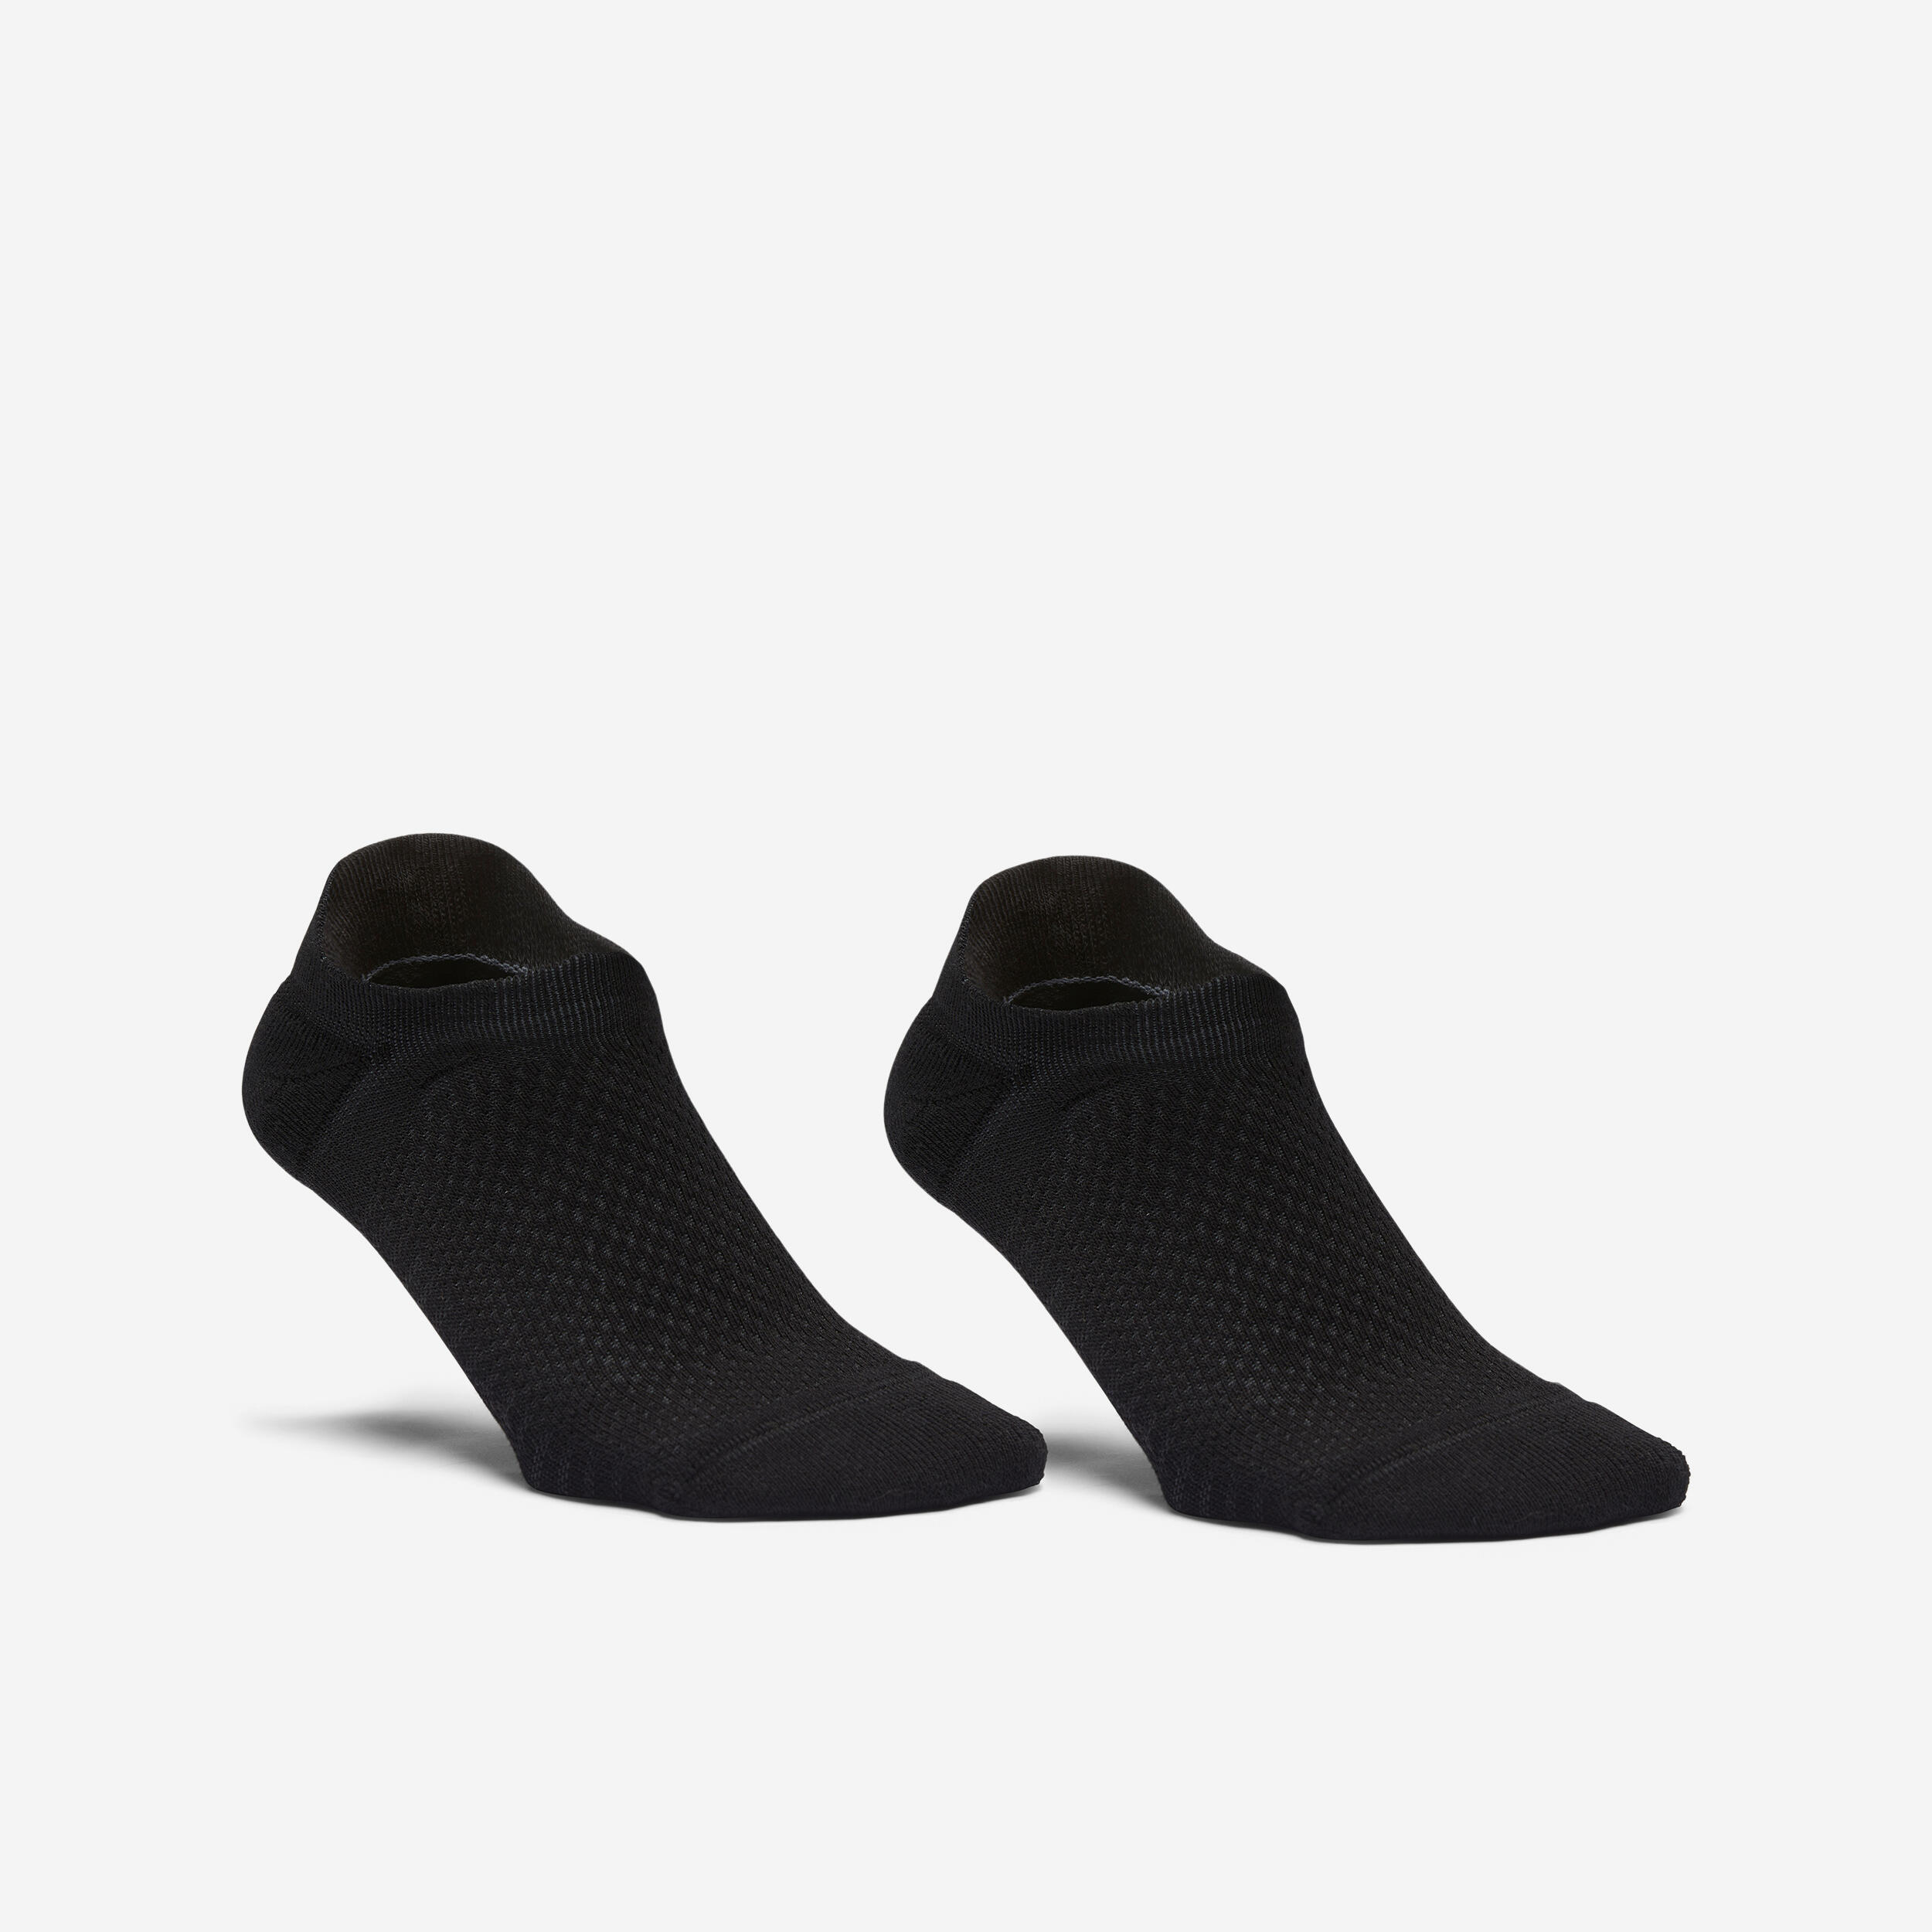 Low socks - Deocell tech - URBAN WALK 2 pairs - Black